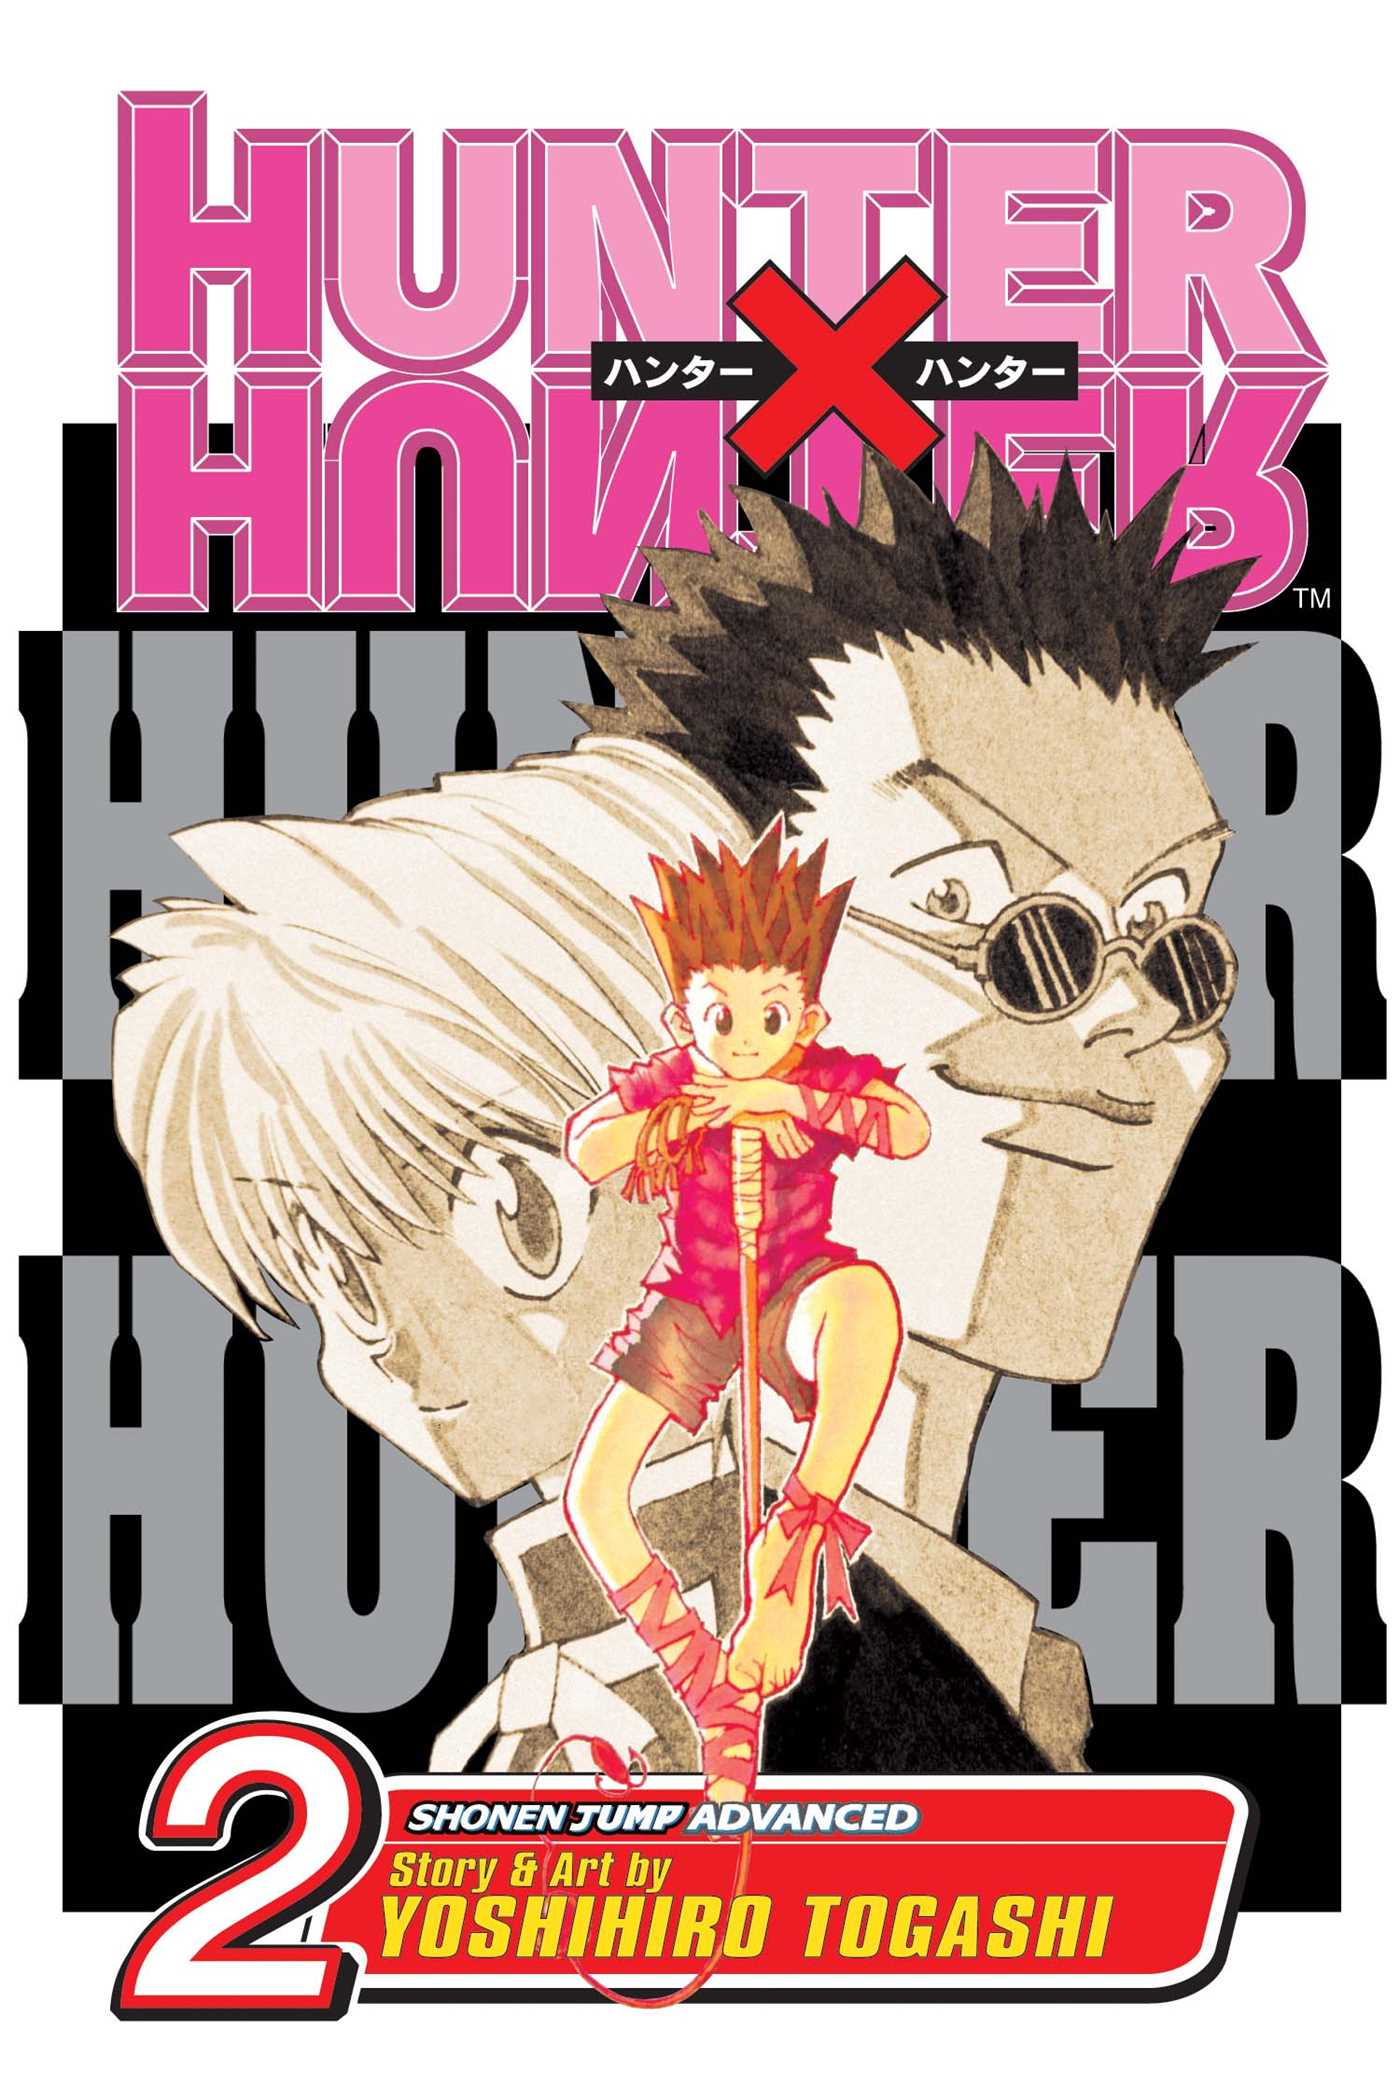 Hunter x Hunter mangaka all but confirms the series' return